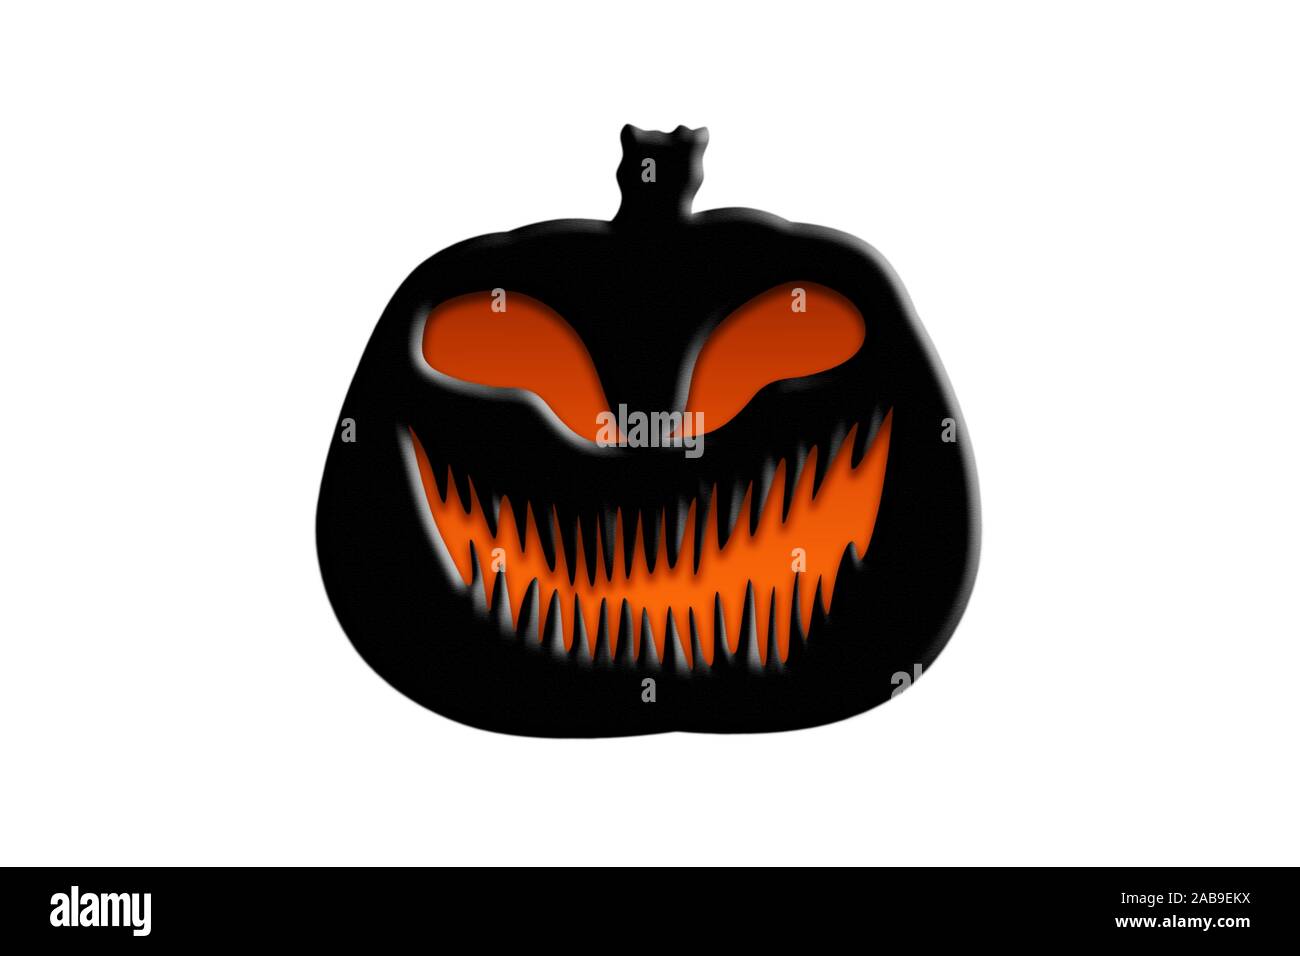 Halloween Pumpkin, Jack Lantern Emoticon Isolated on White Background. Stock Photo